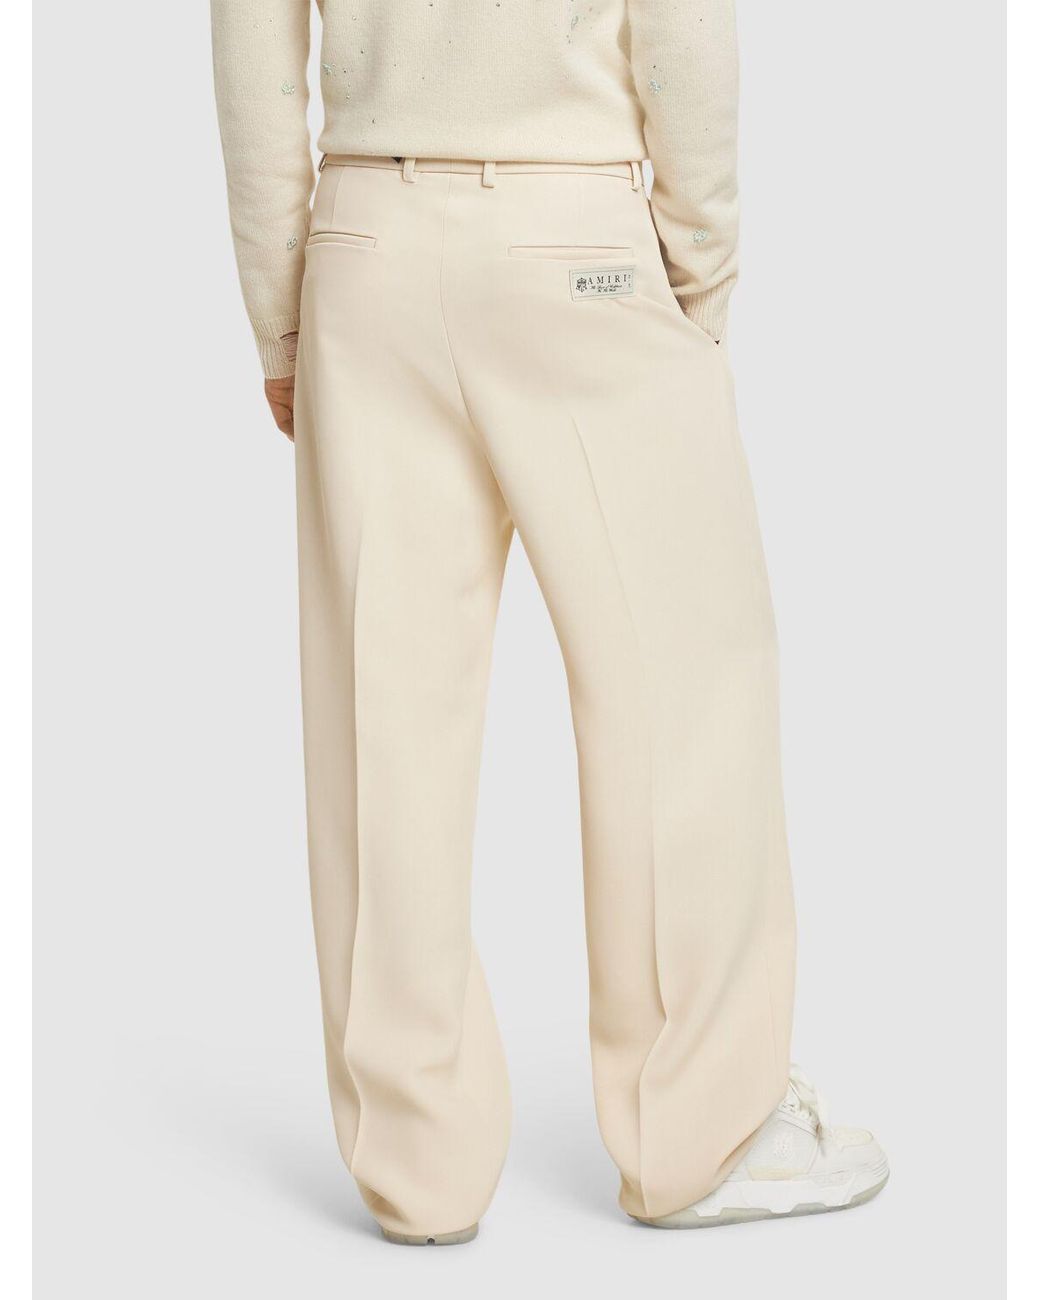 Men's Formal Chino Pants Wide Leg Baggy Long Pants Office Smart Trousers  Slacks | eBay